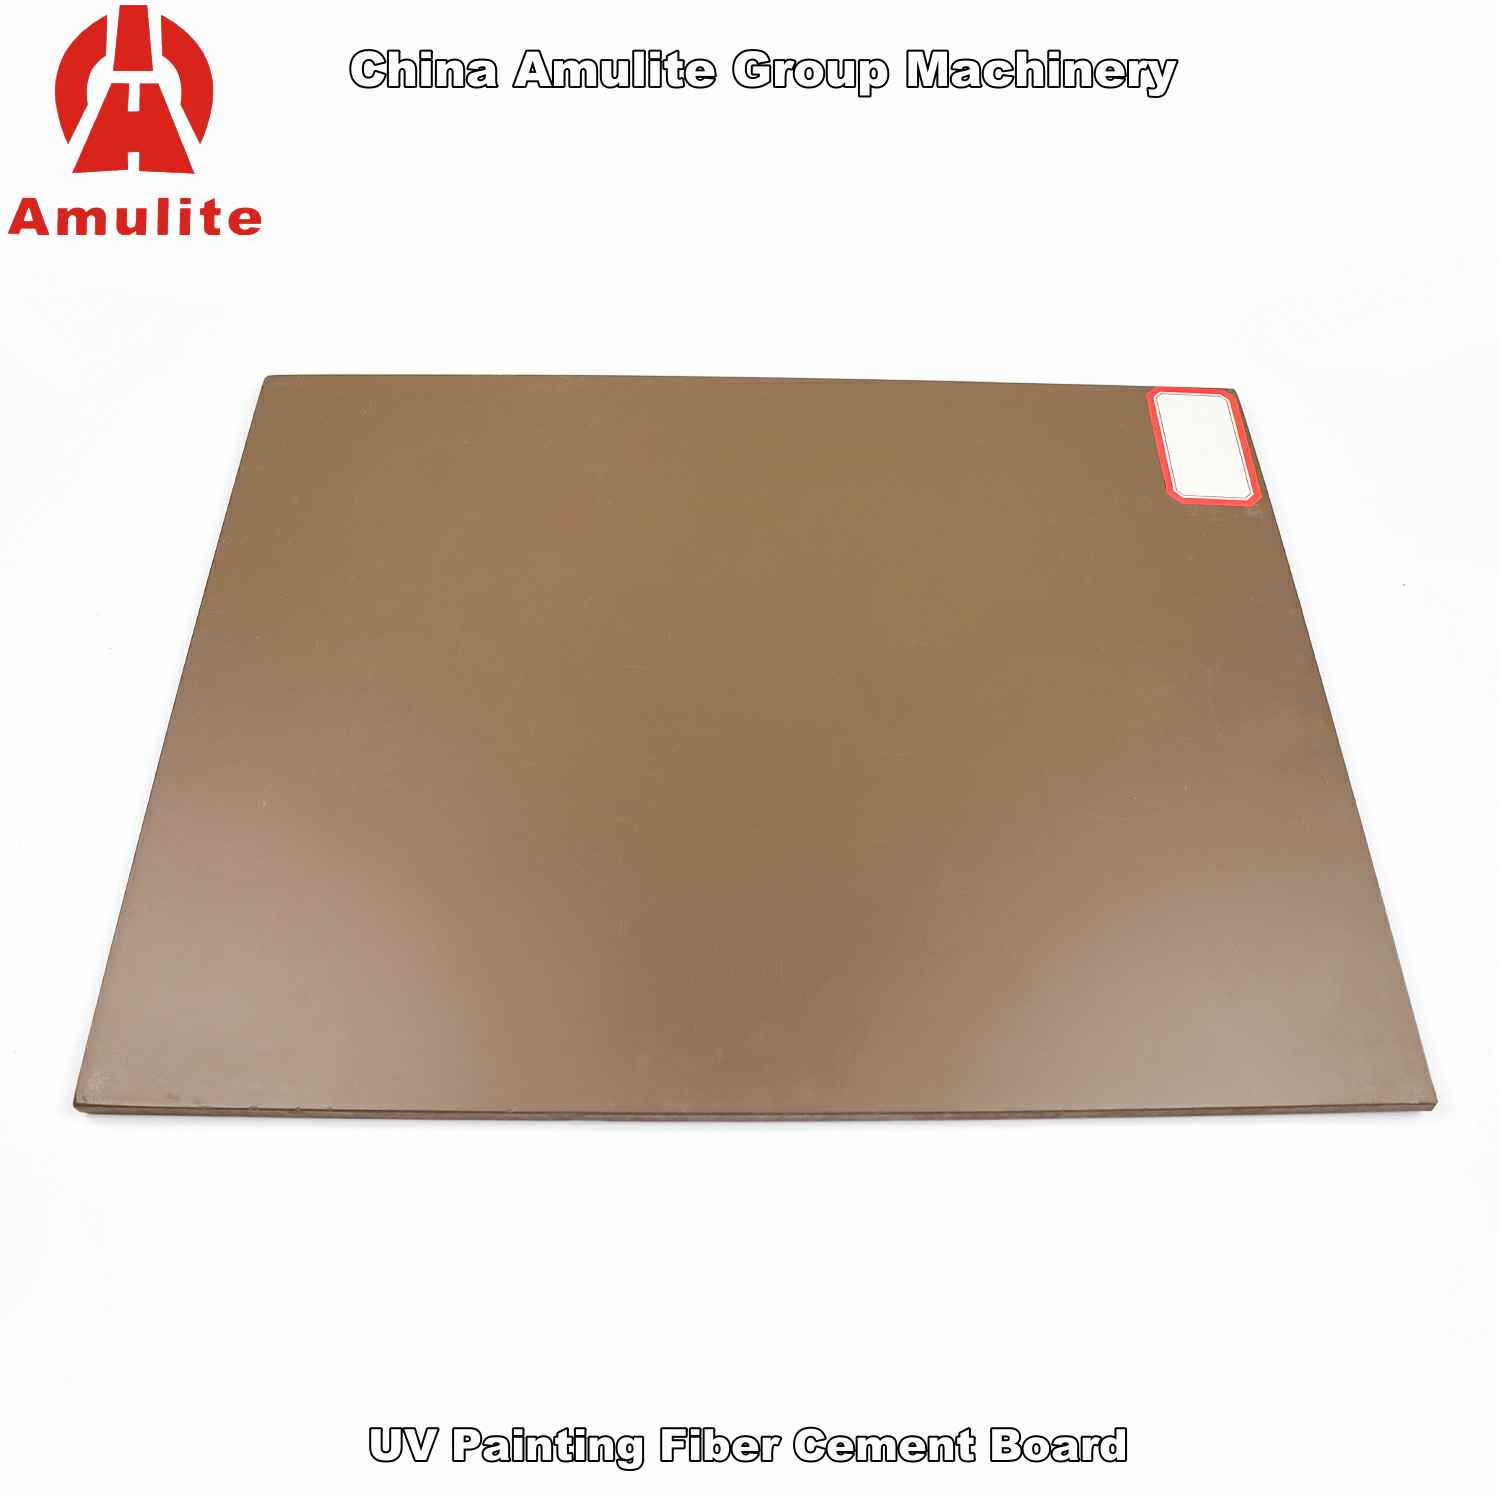 UV Painting Fiber Cement Board (6)